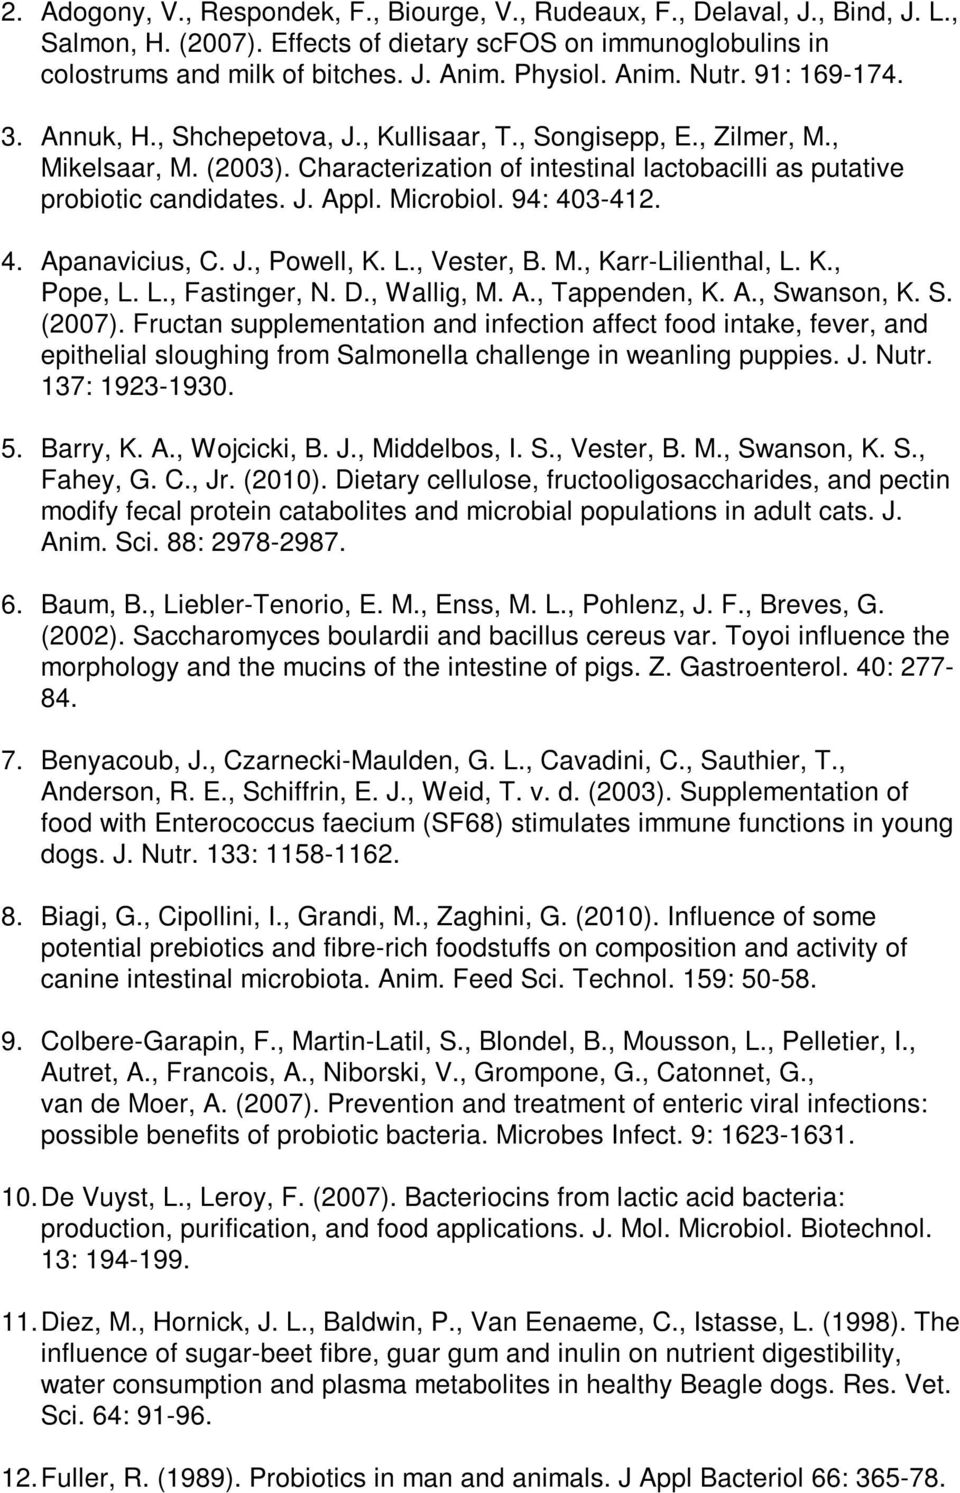 Microbiol. 94: 403-412. 4. Apanavicius, C. J., Powell, K. L., Vester, B. M., Karr-Lilienthal, L. K., Pope, L. L., Fastinger, N. D., Wallig, M. A., Tappenden, K. A., Swanson, K. S. (2007).